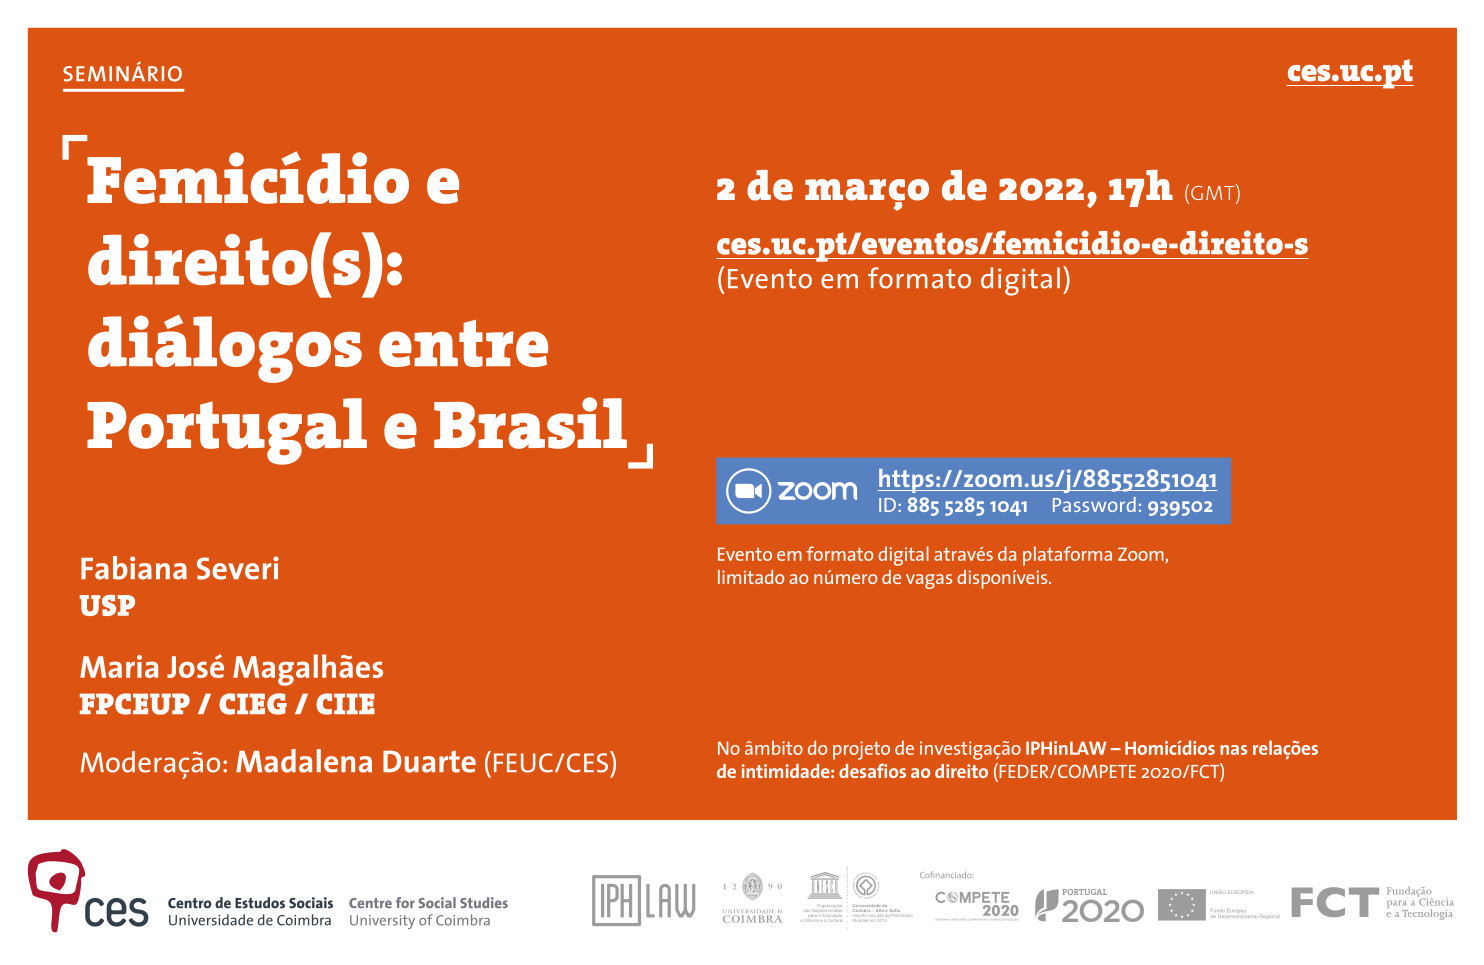 Femicídio e direito(s): diálogos entre Portugal e Brasil<span id="edit_37332"><script>$(function() { $('#edit_37332').load( "/myces/user/editobj.php?tipo=evento&id=37332" ); });</script></span>